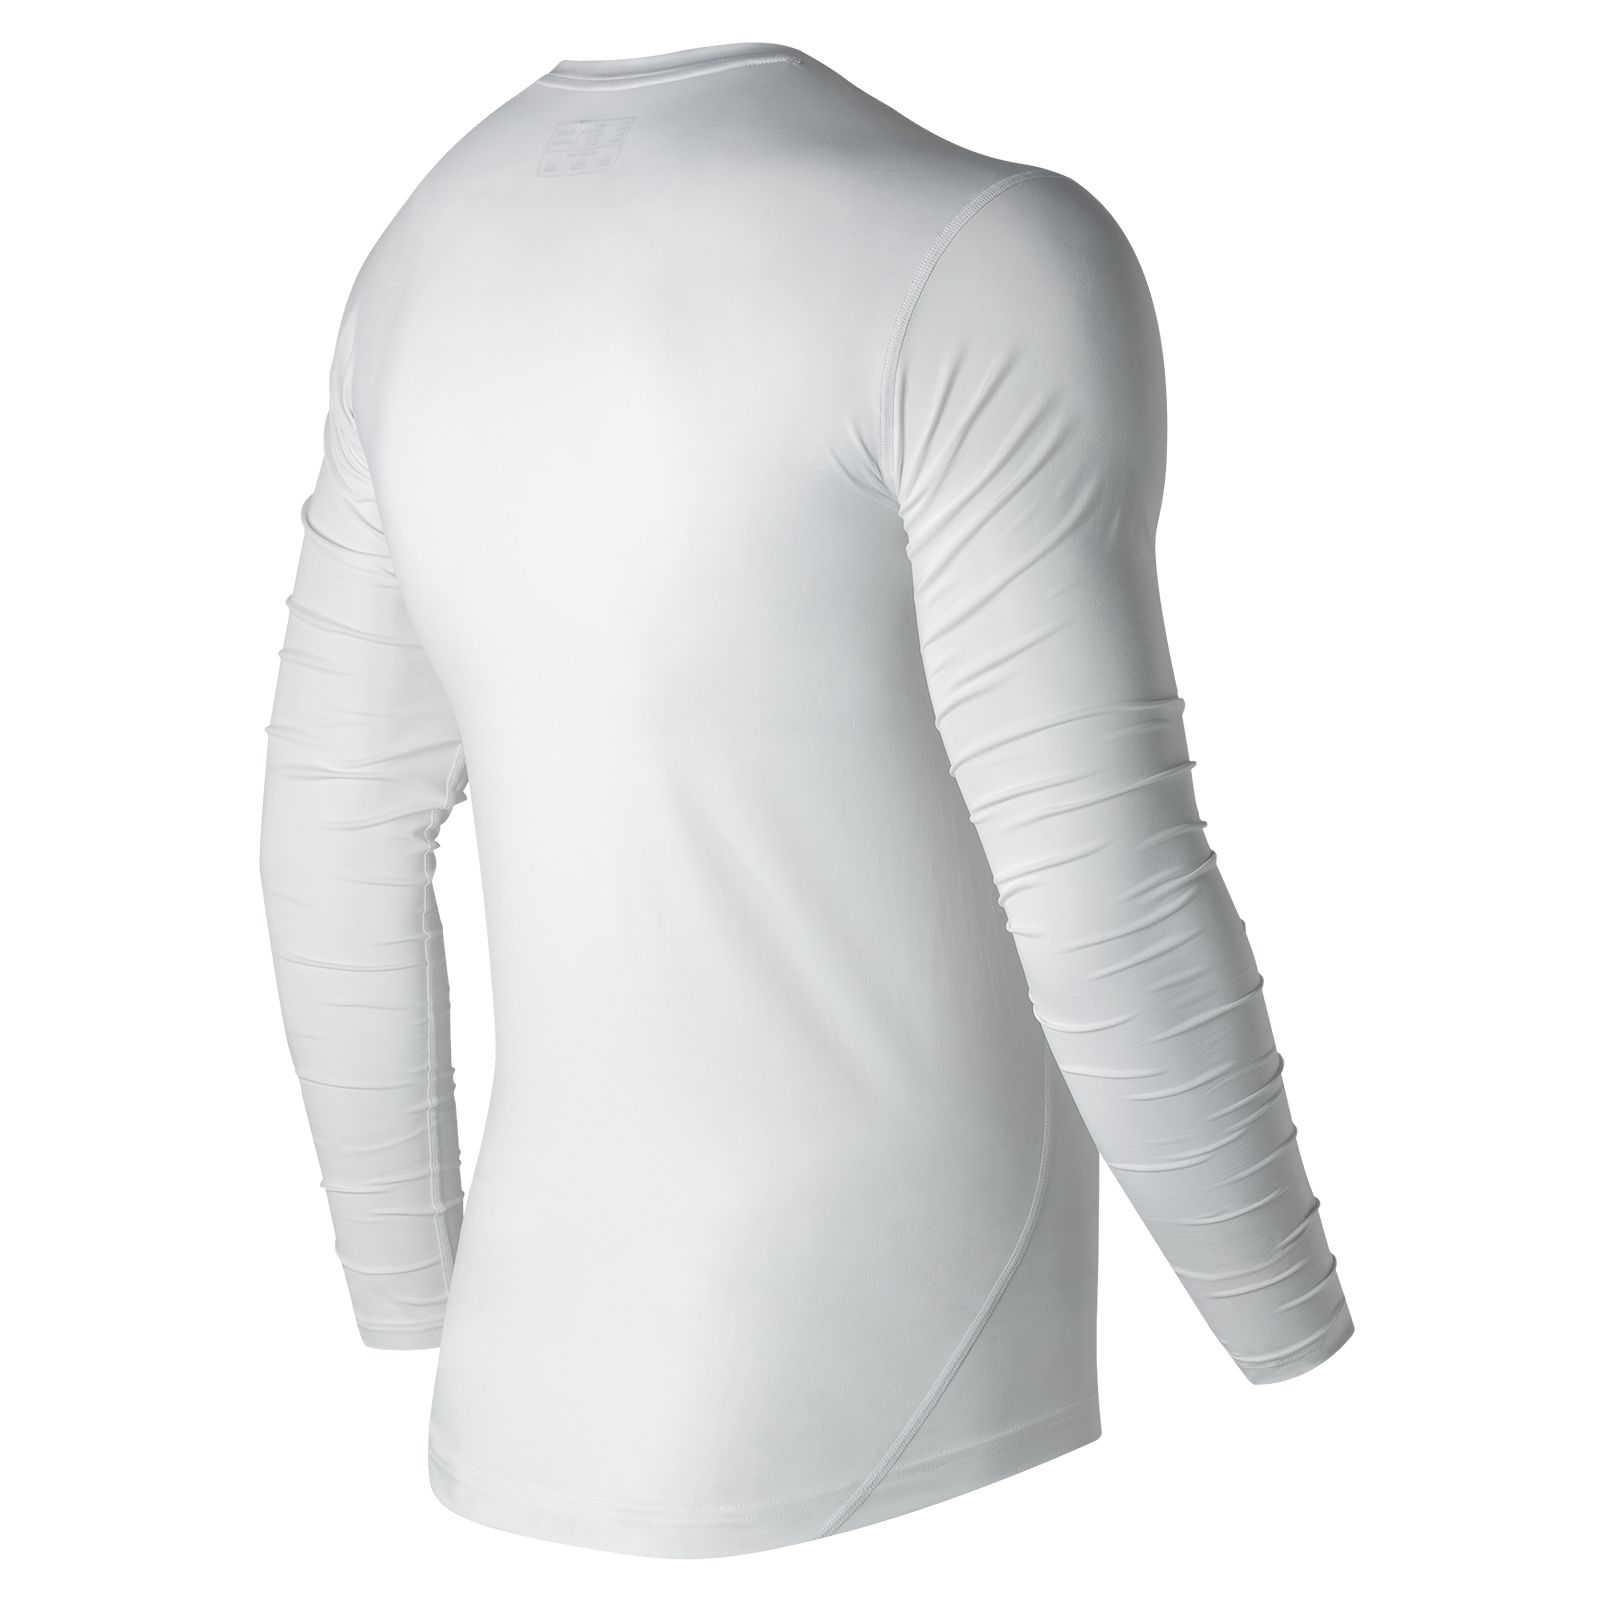 Men's NB Long Sleeve Compression Top, White image number 1